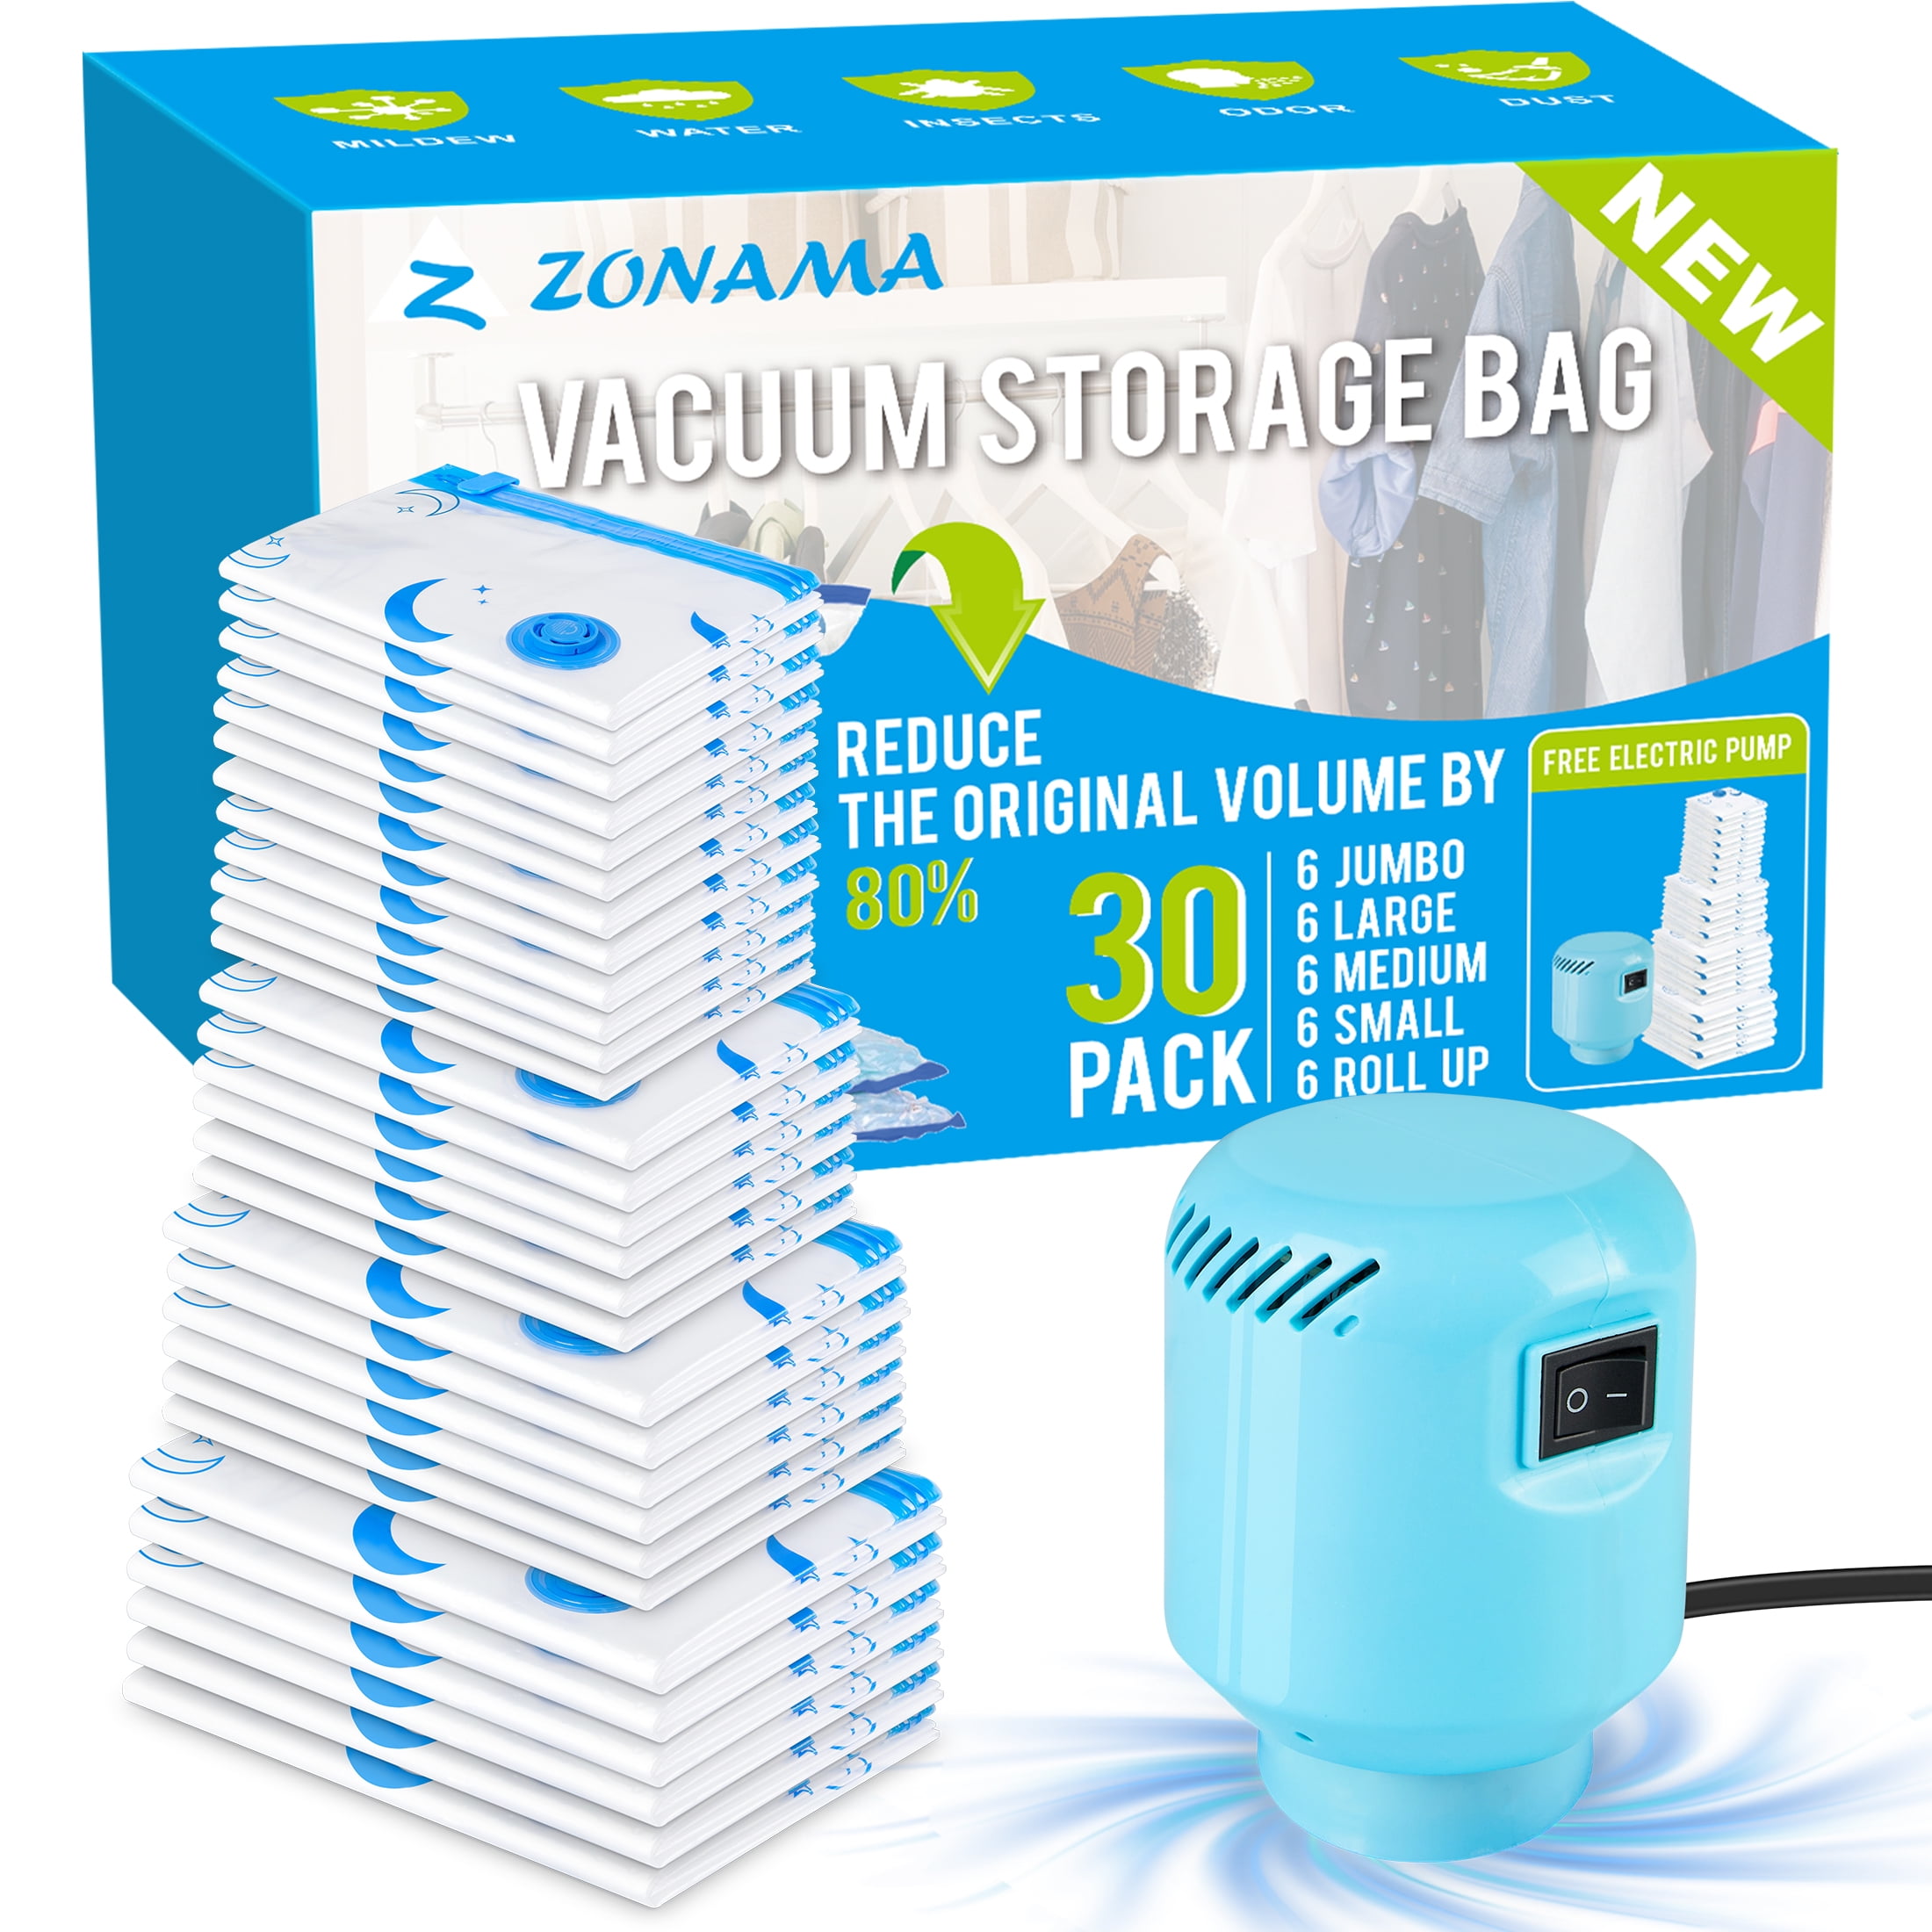 Z ZONAMA Vacuum Storage Bags with Electric Air Pump, 12 Pack (4